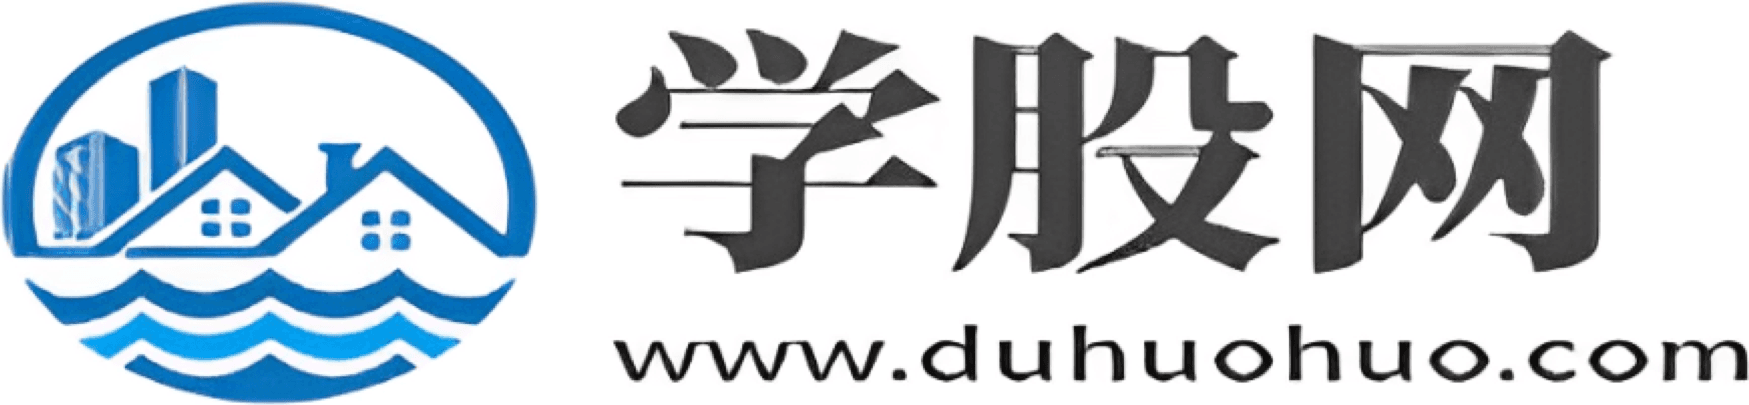 duhuohuo.com